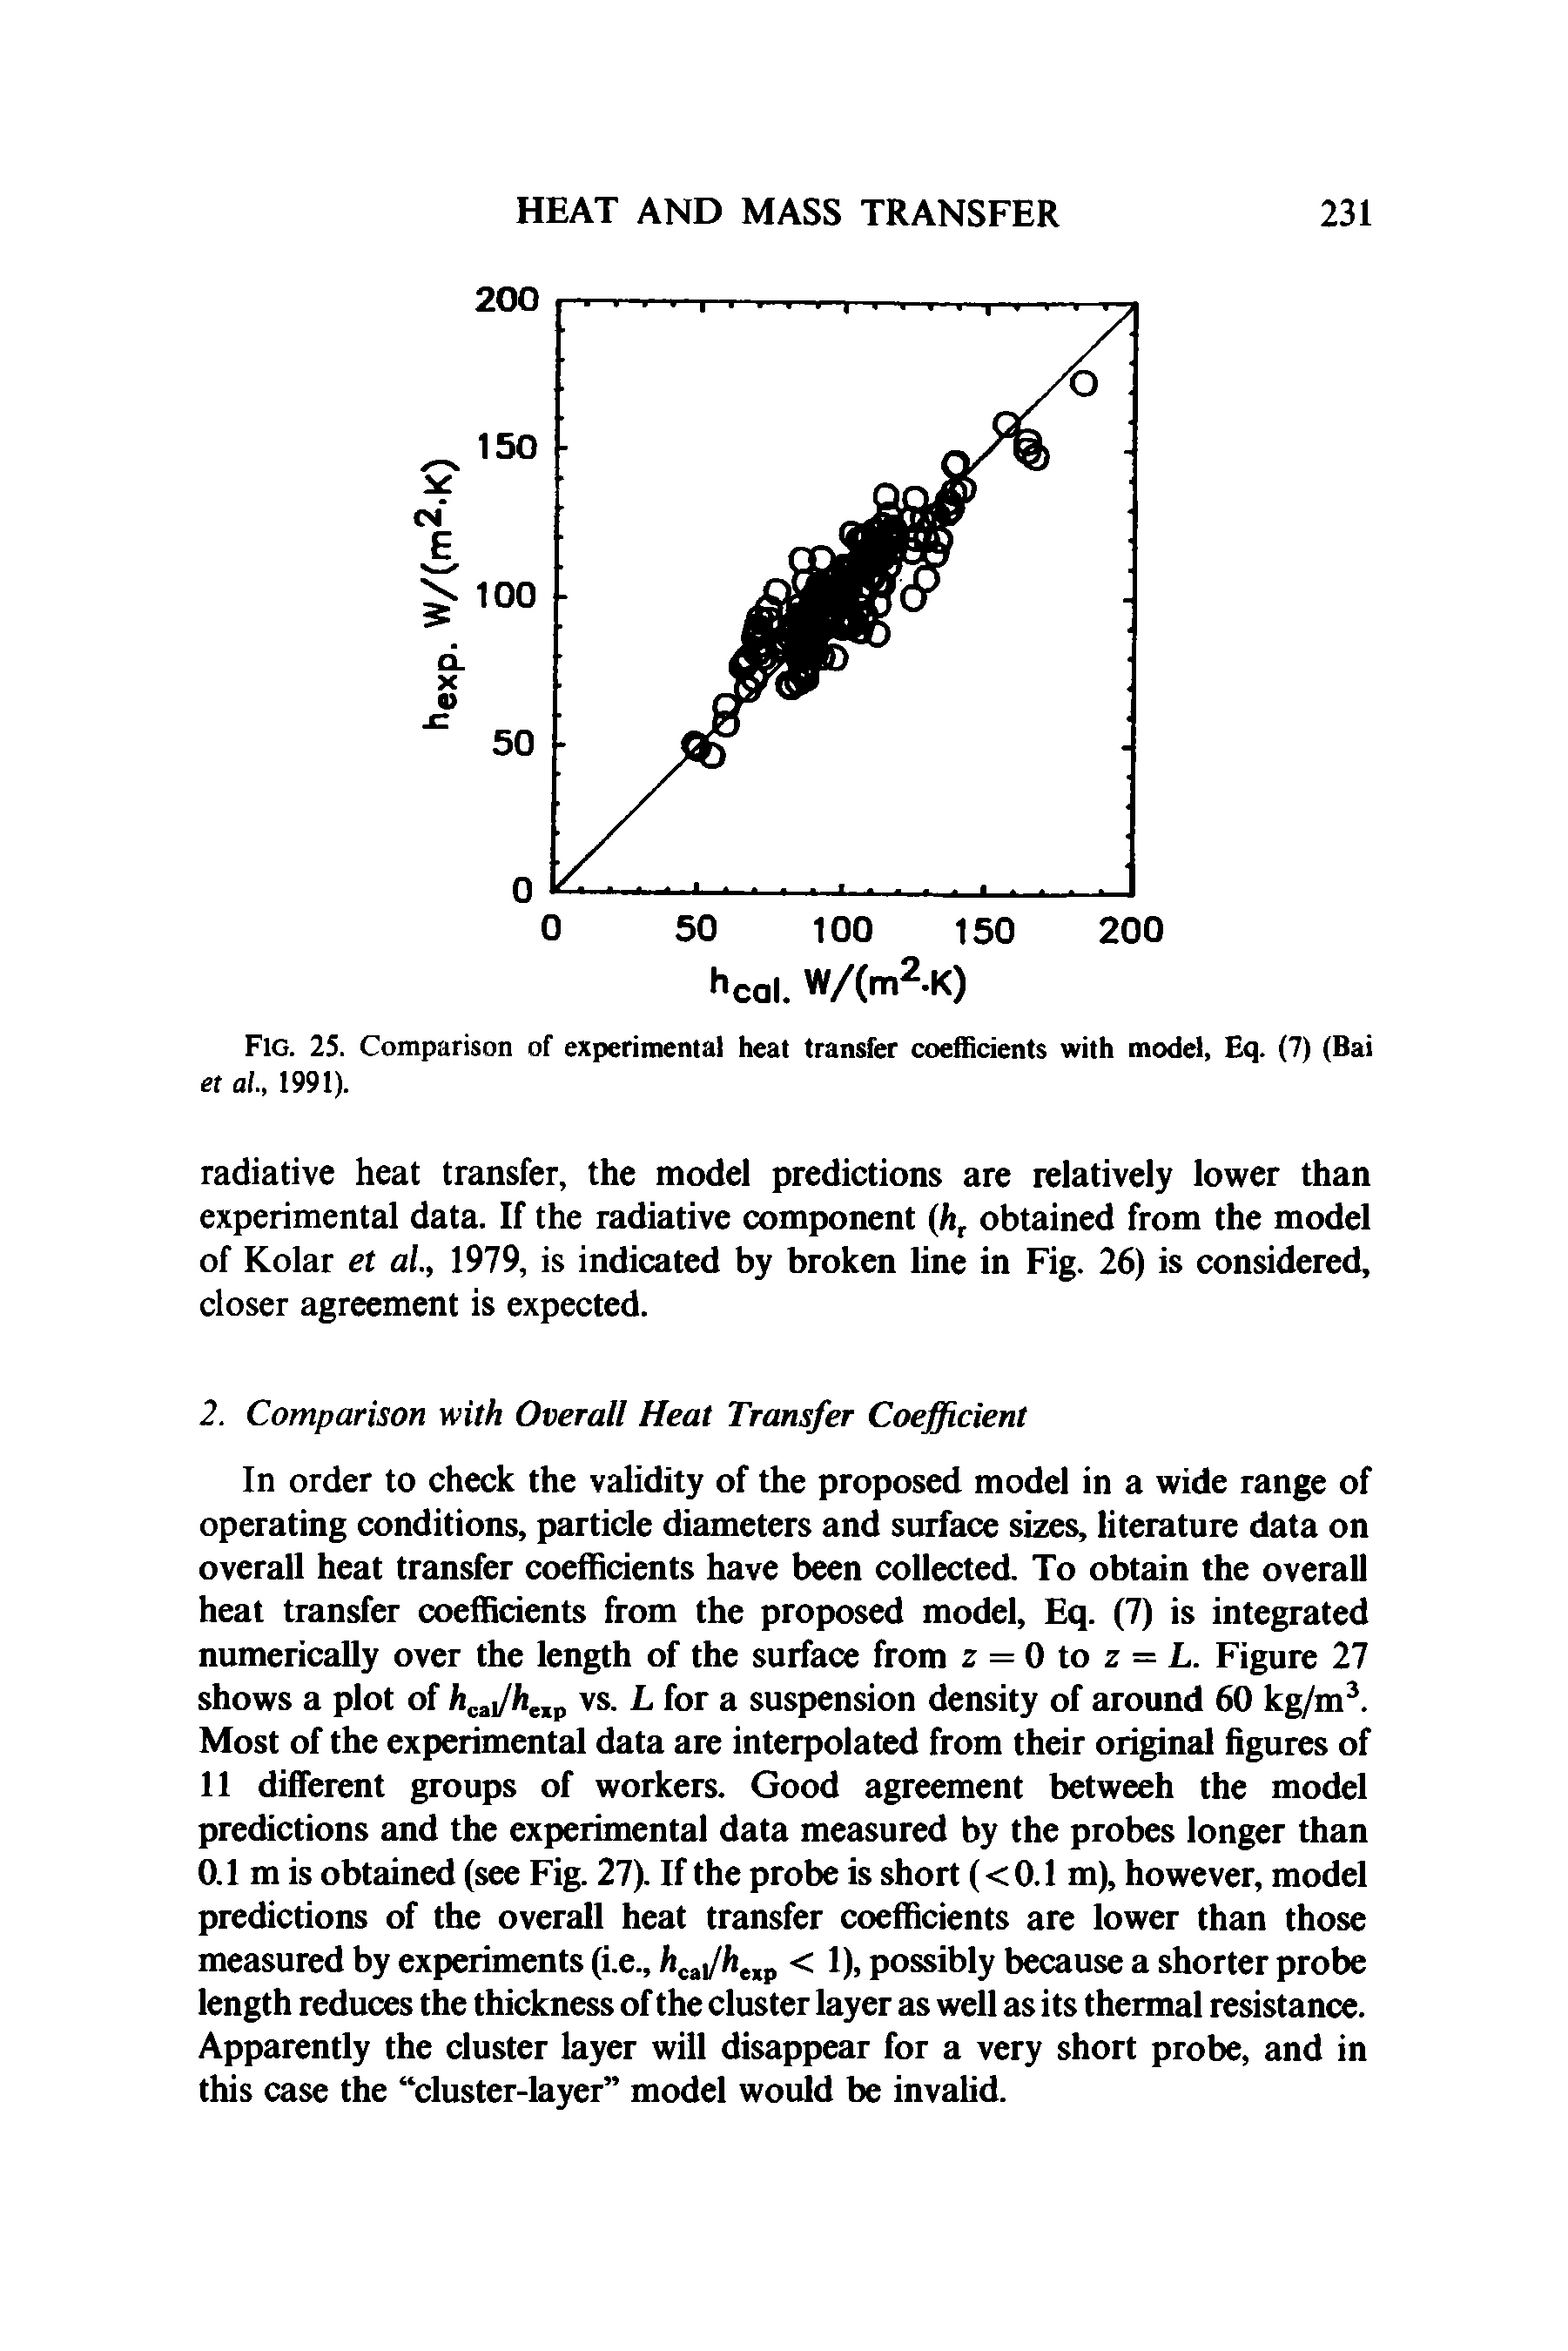 Fig. 25. Comparison of experimental heat transfer coefficients with model, Eq. (7) (Bai et al, 1991).